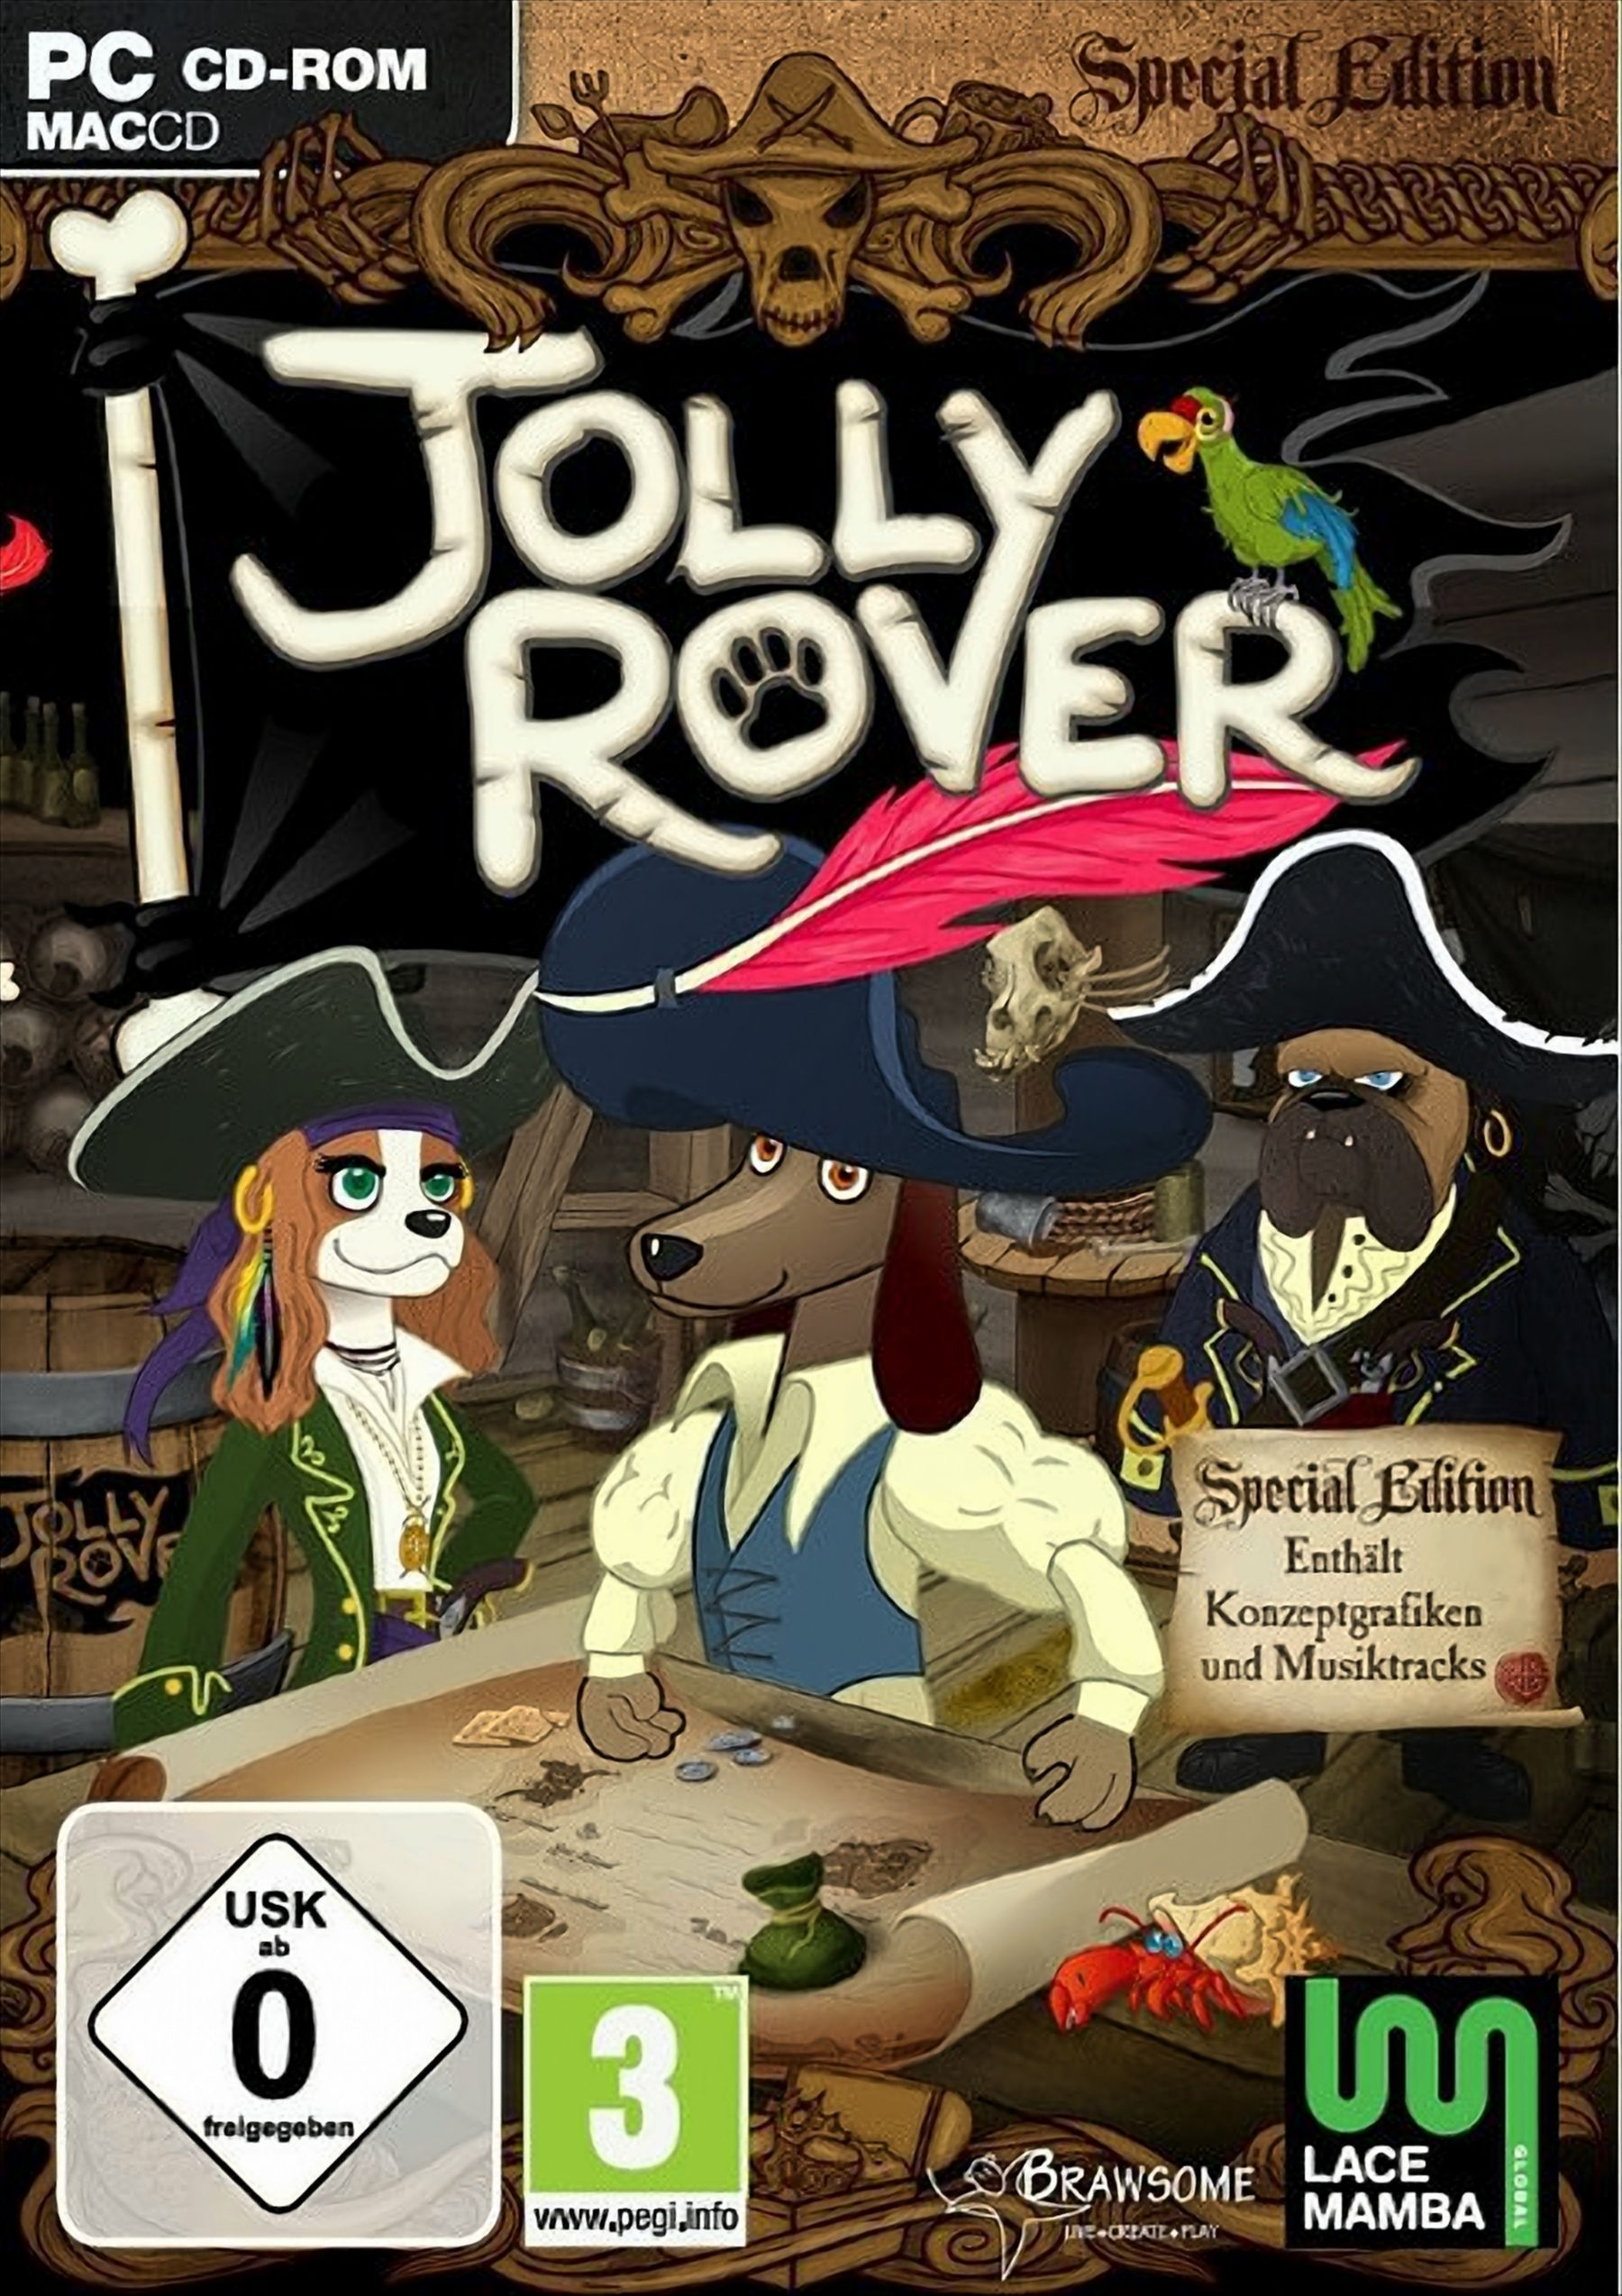 Rover - Jolly [PC]